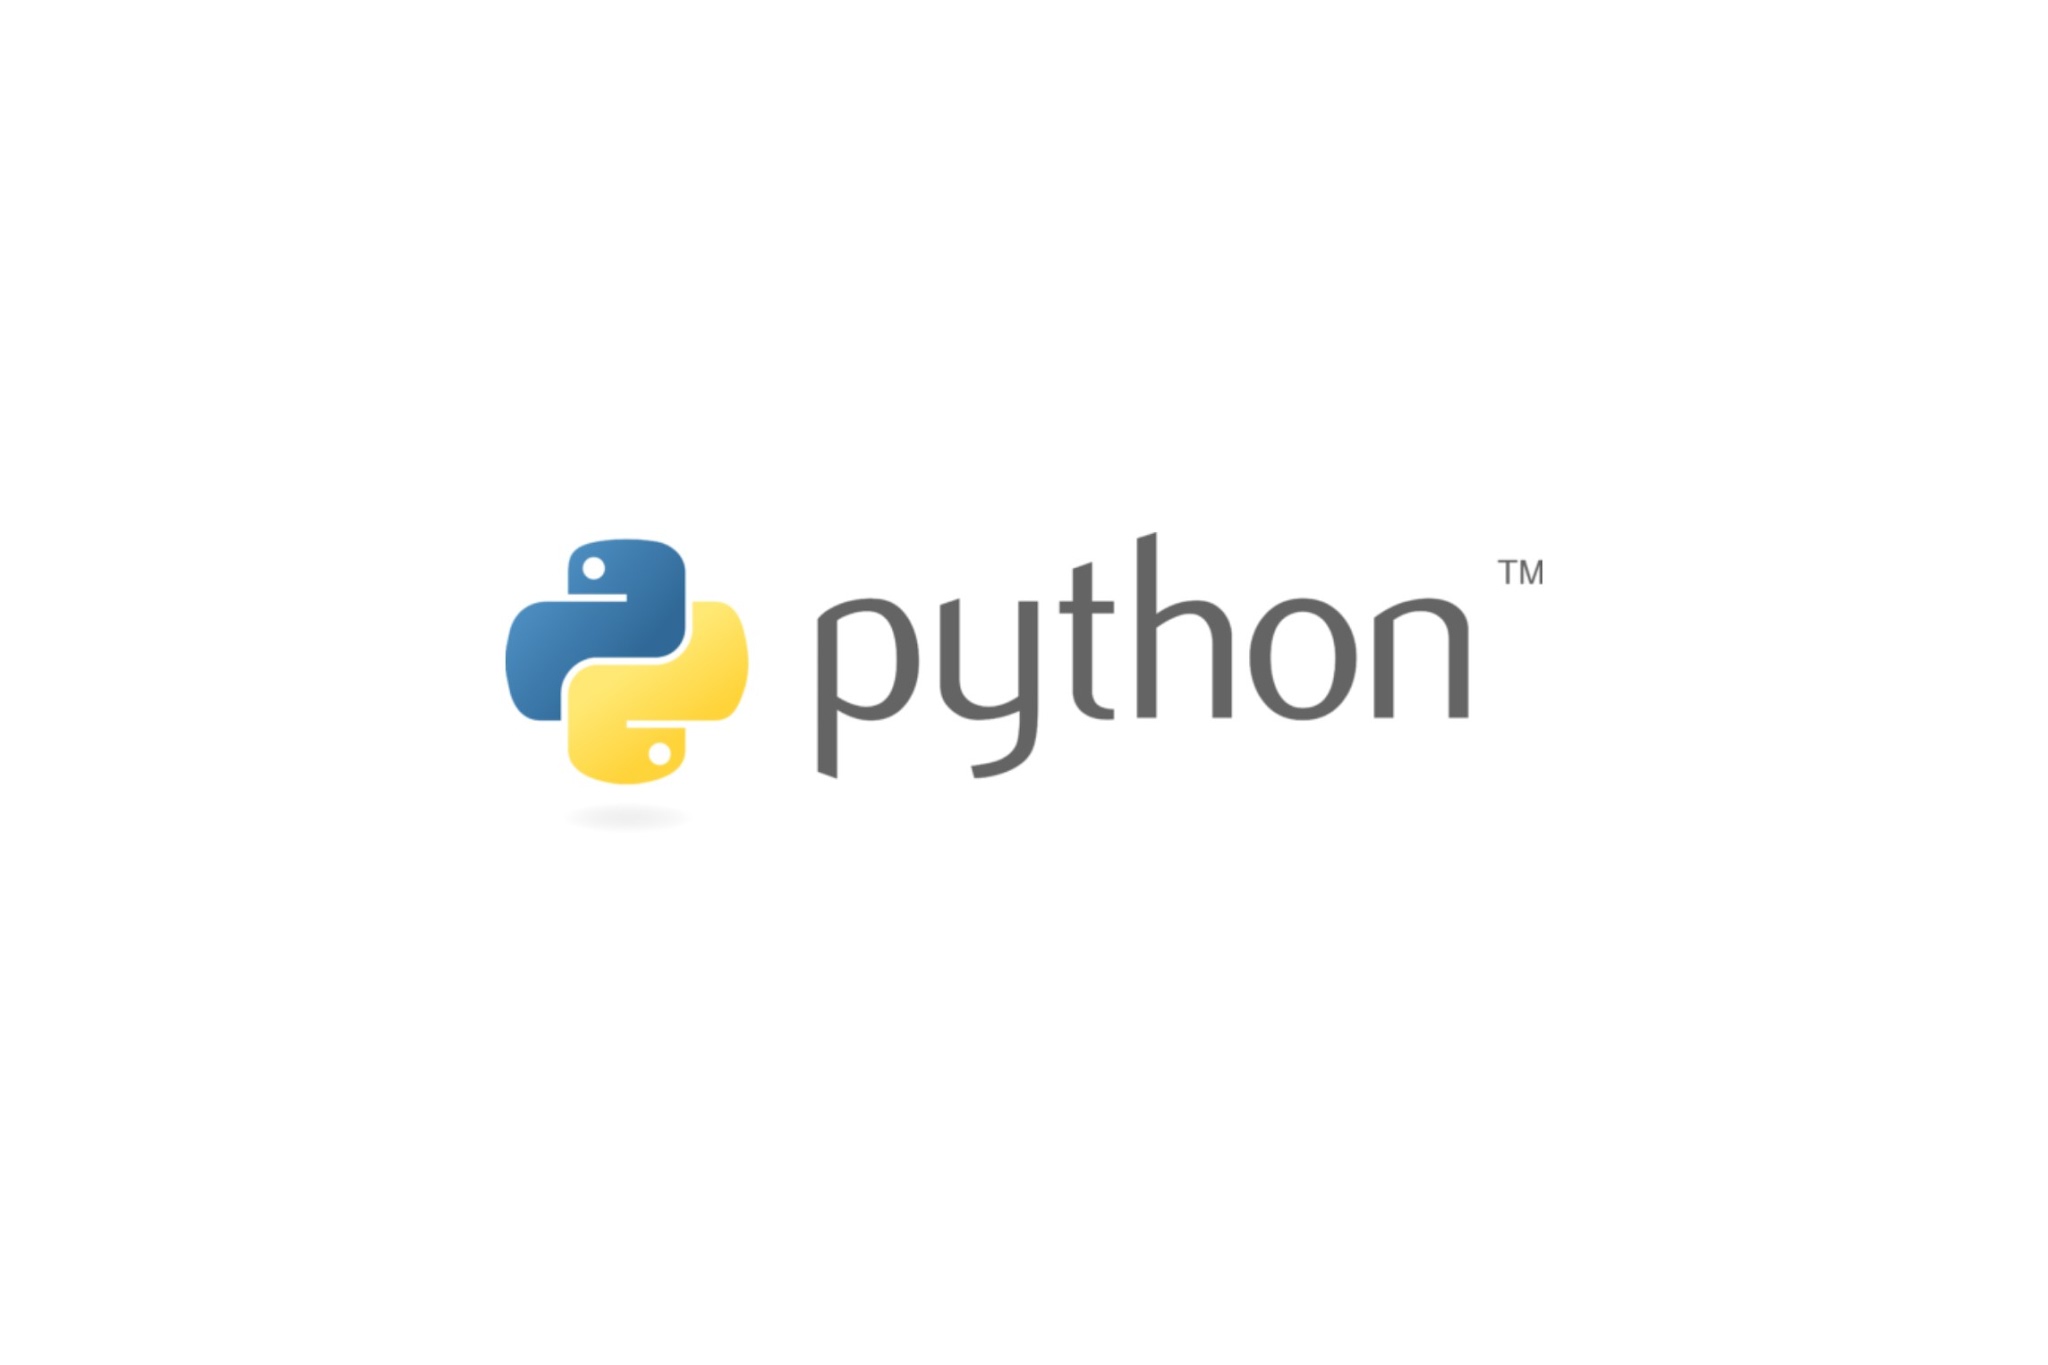 Библиотека wikipedia python. Питон программирование на прозрачном фоне. Python без фона. Значок Python. Python логотип на прозрачном фоне.